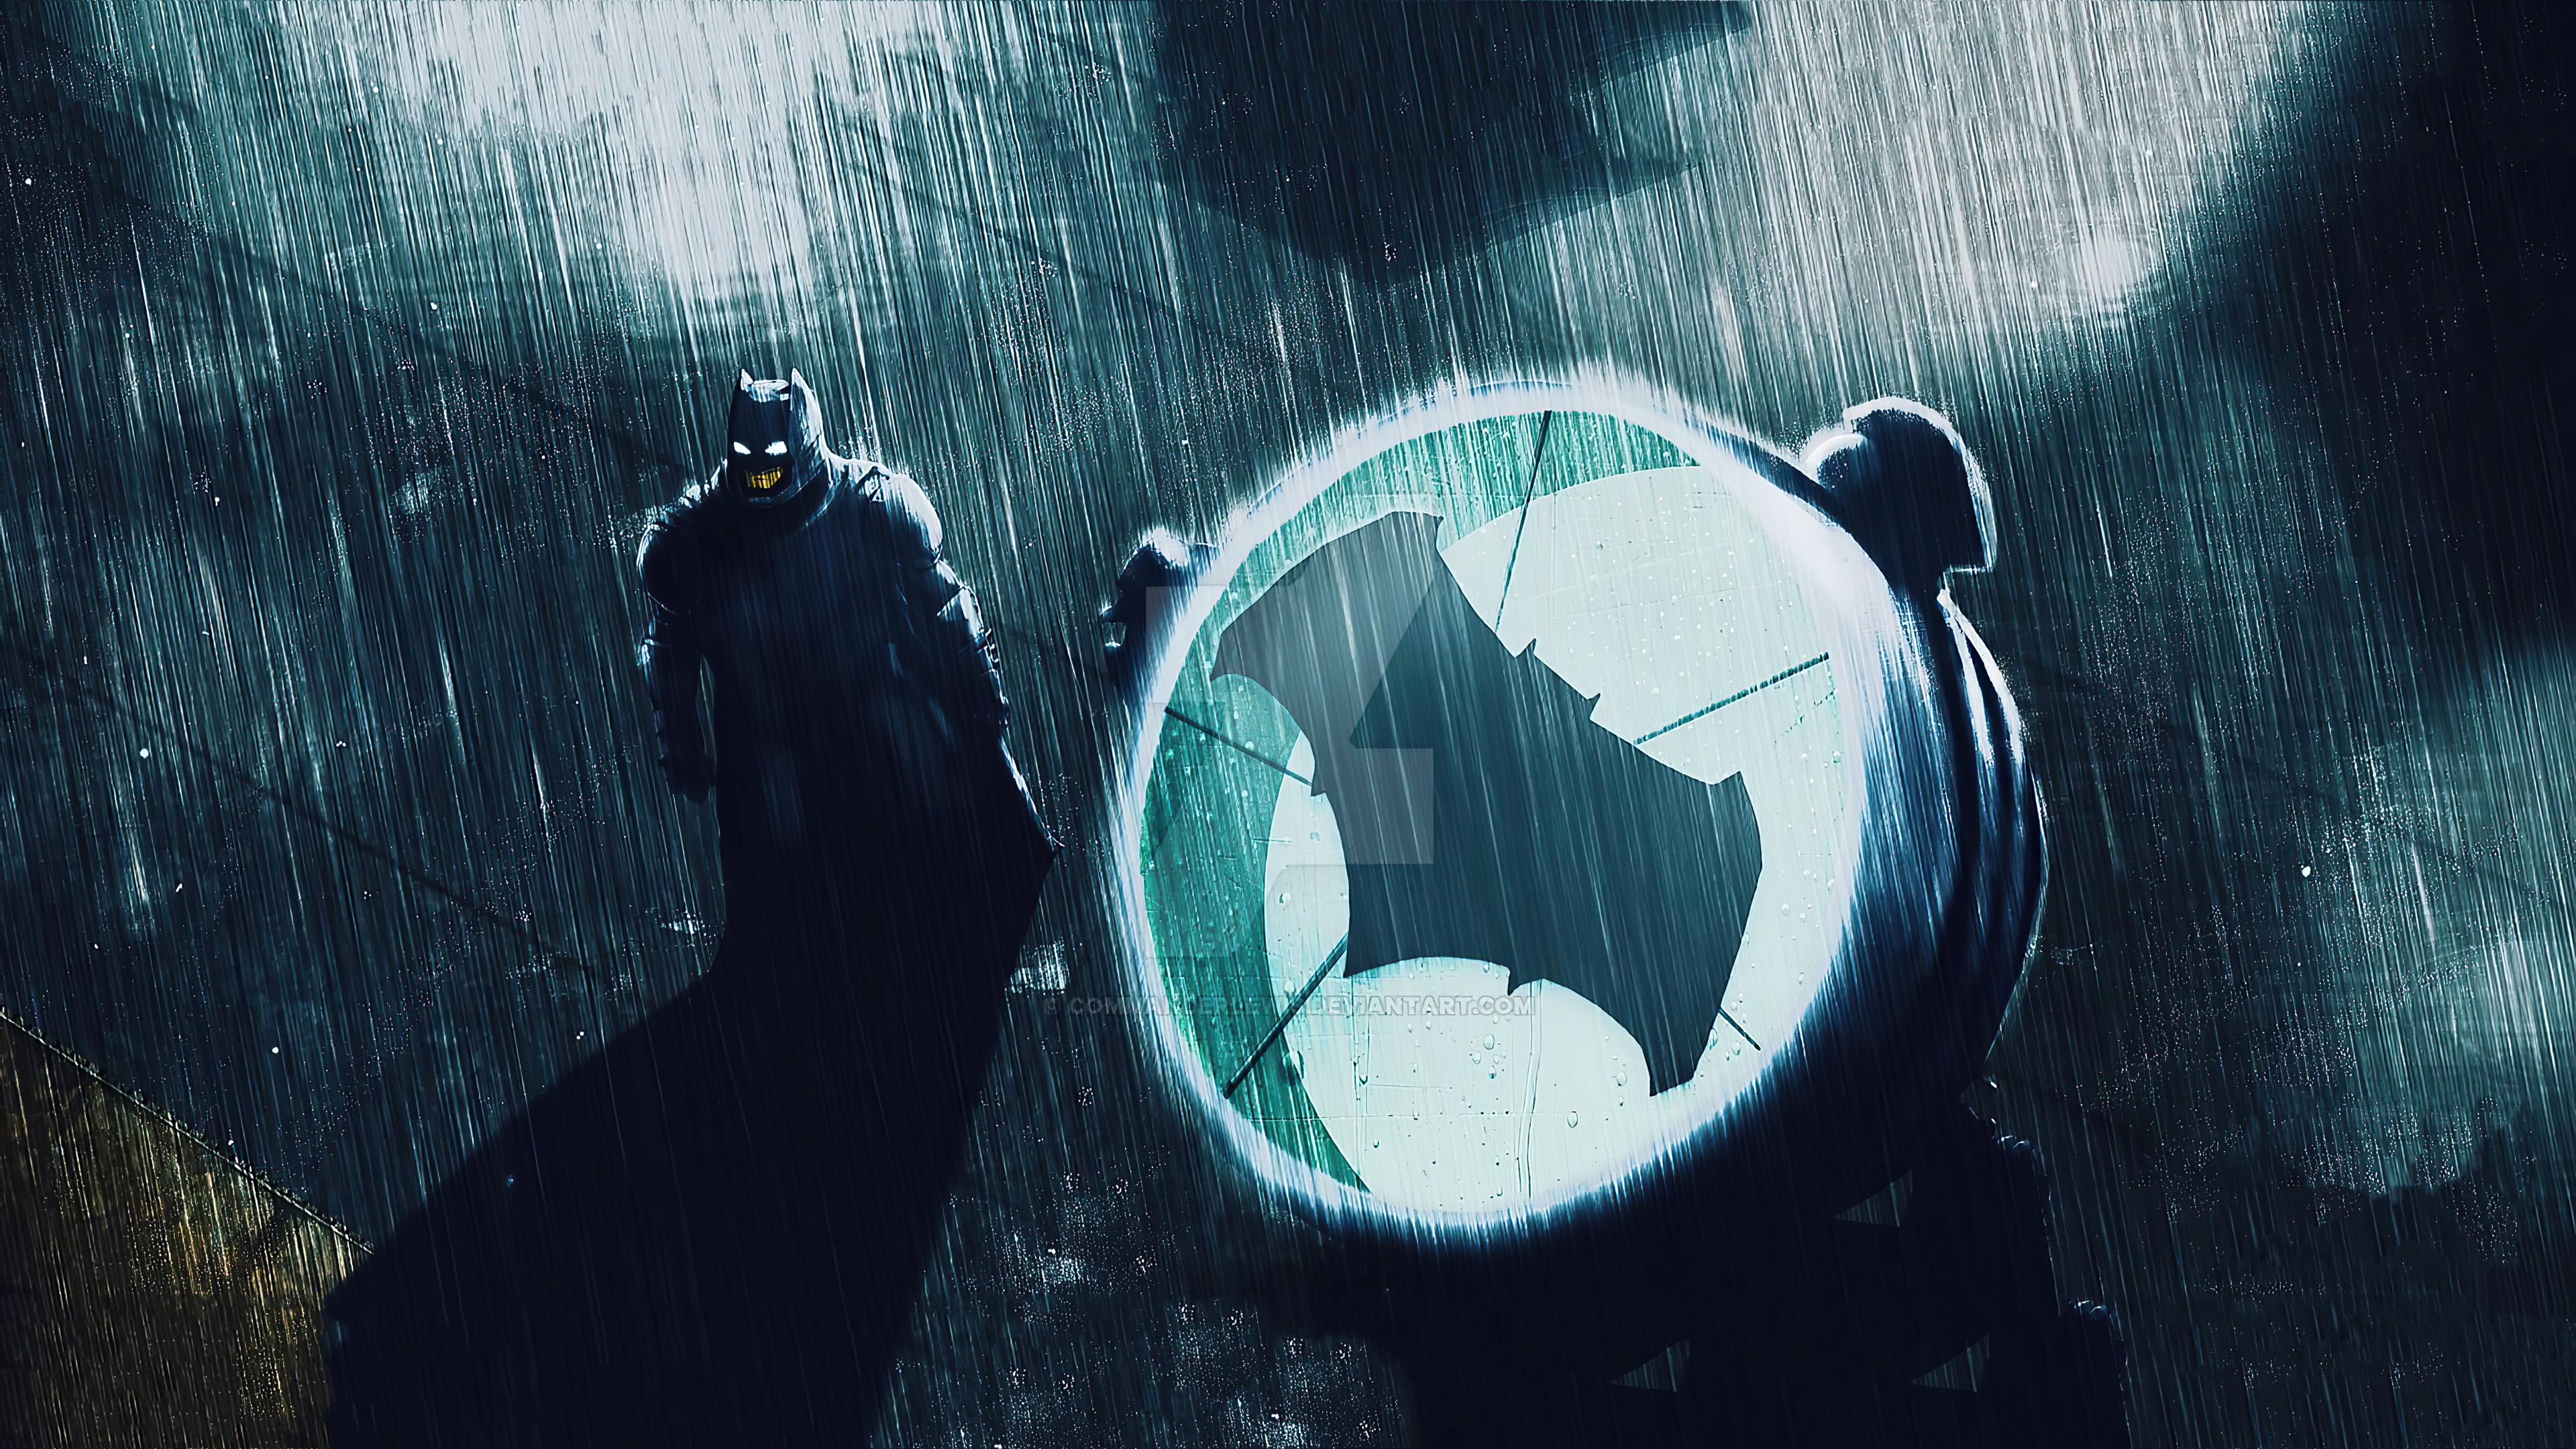 Batman Knight Bat Signal 4k, HD Superheroes, 4k Wallpaper, Image, Background, Photo and Picture